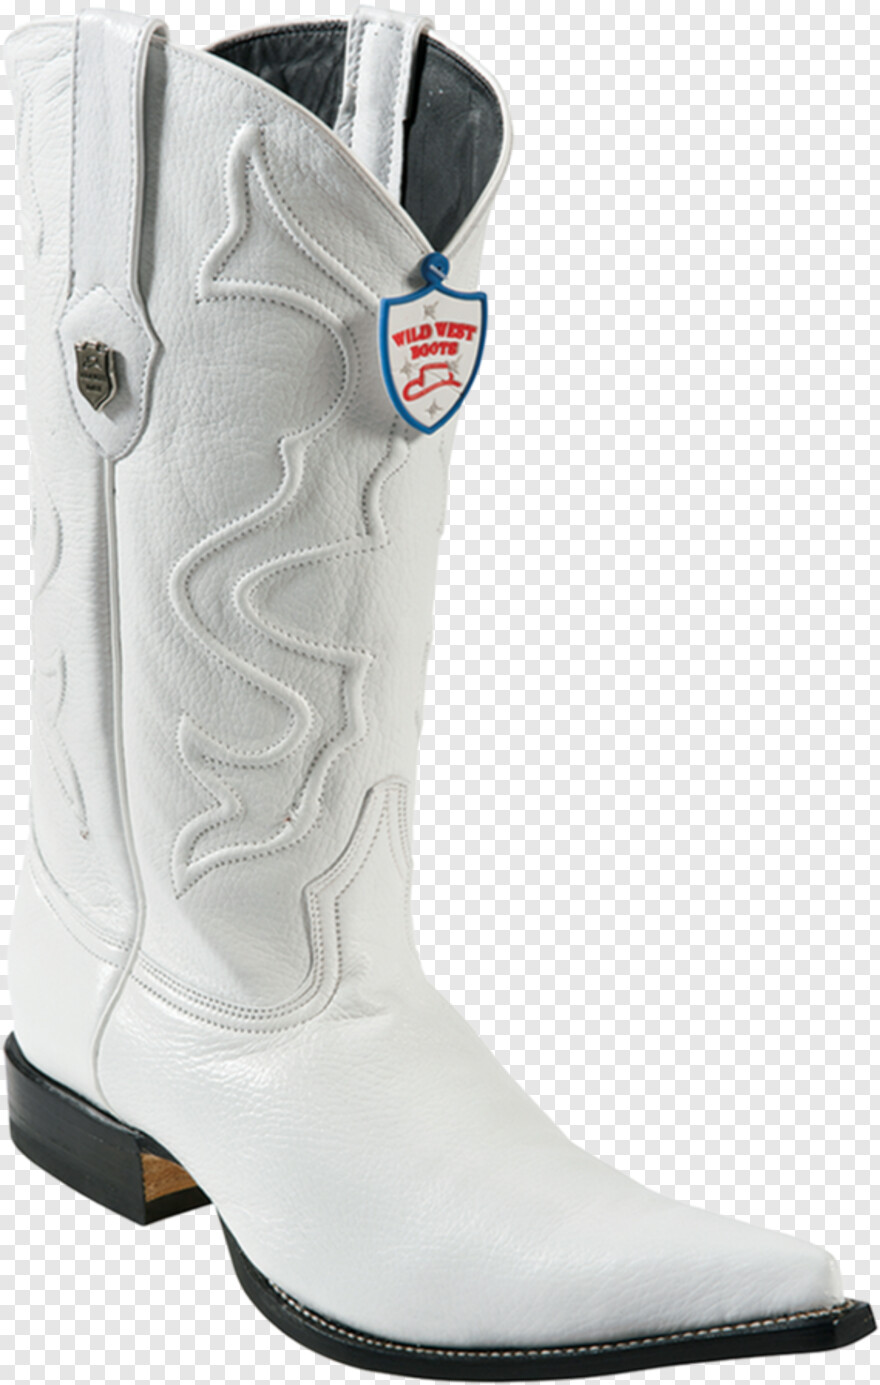 cowboy-boot # 331140